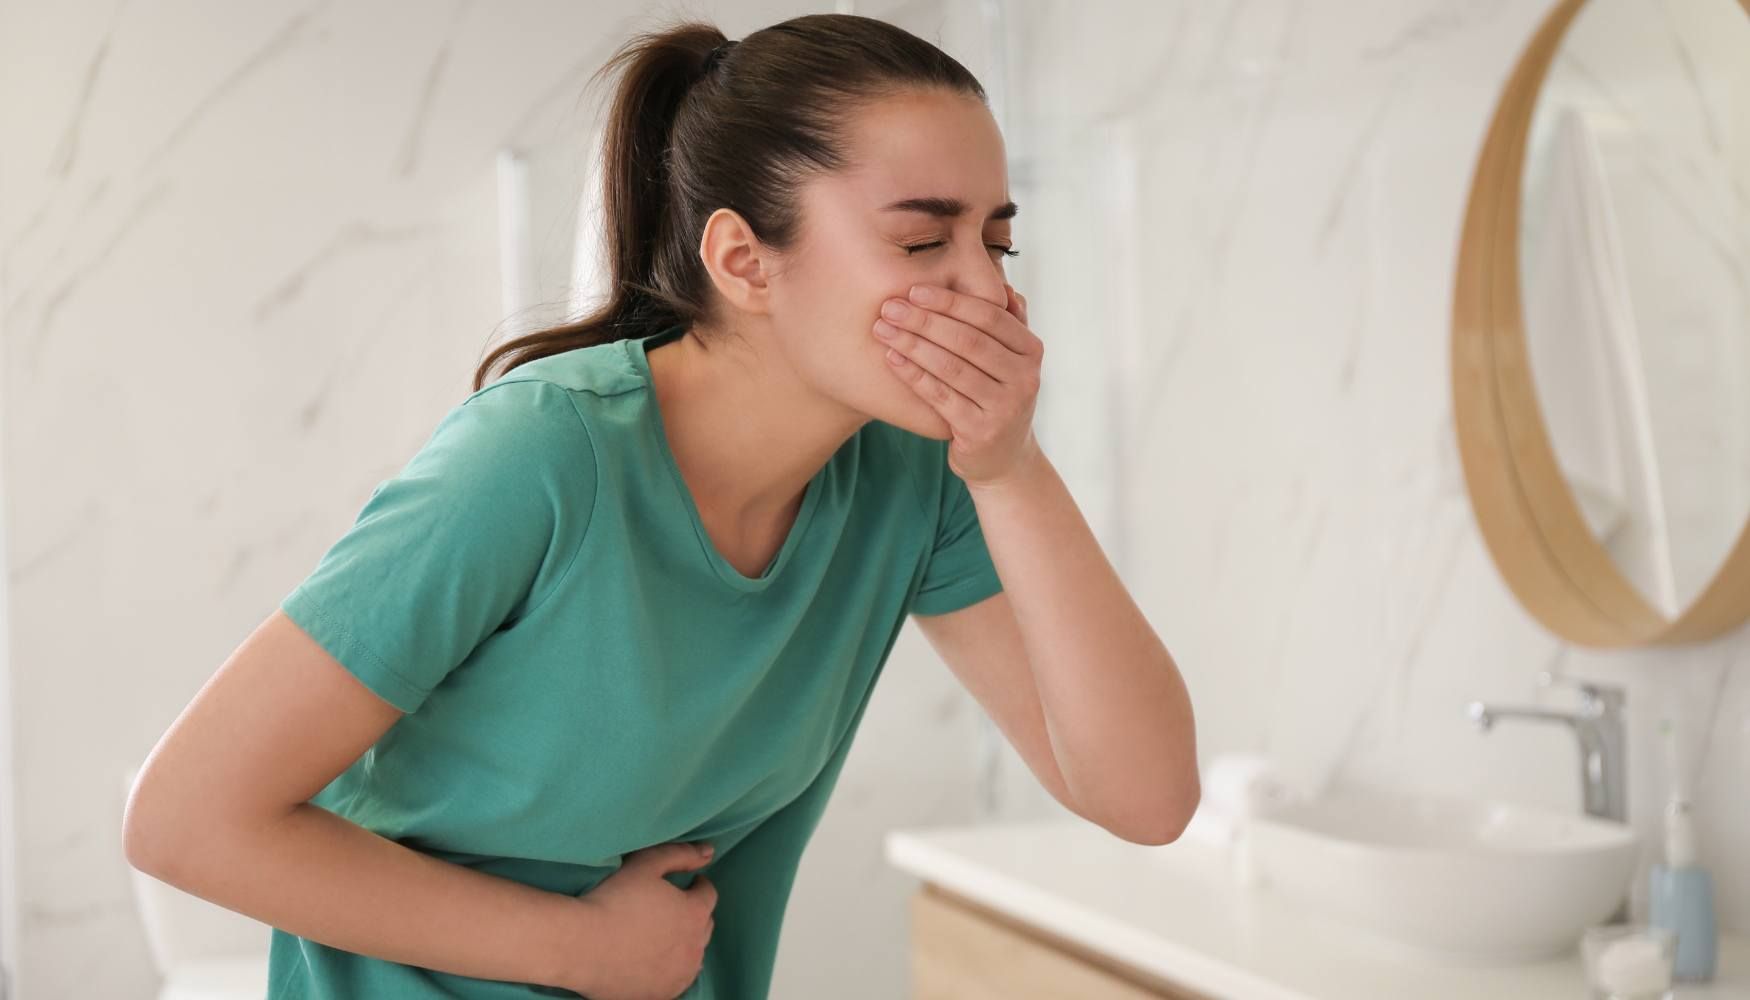 can nausea be a symptom of hypothyroidism